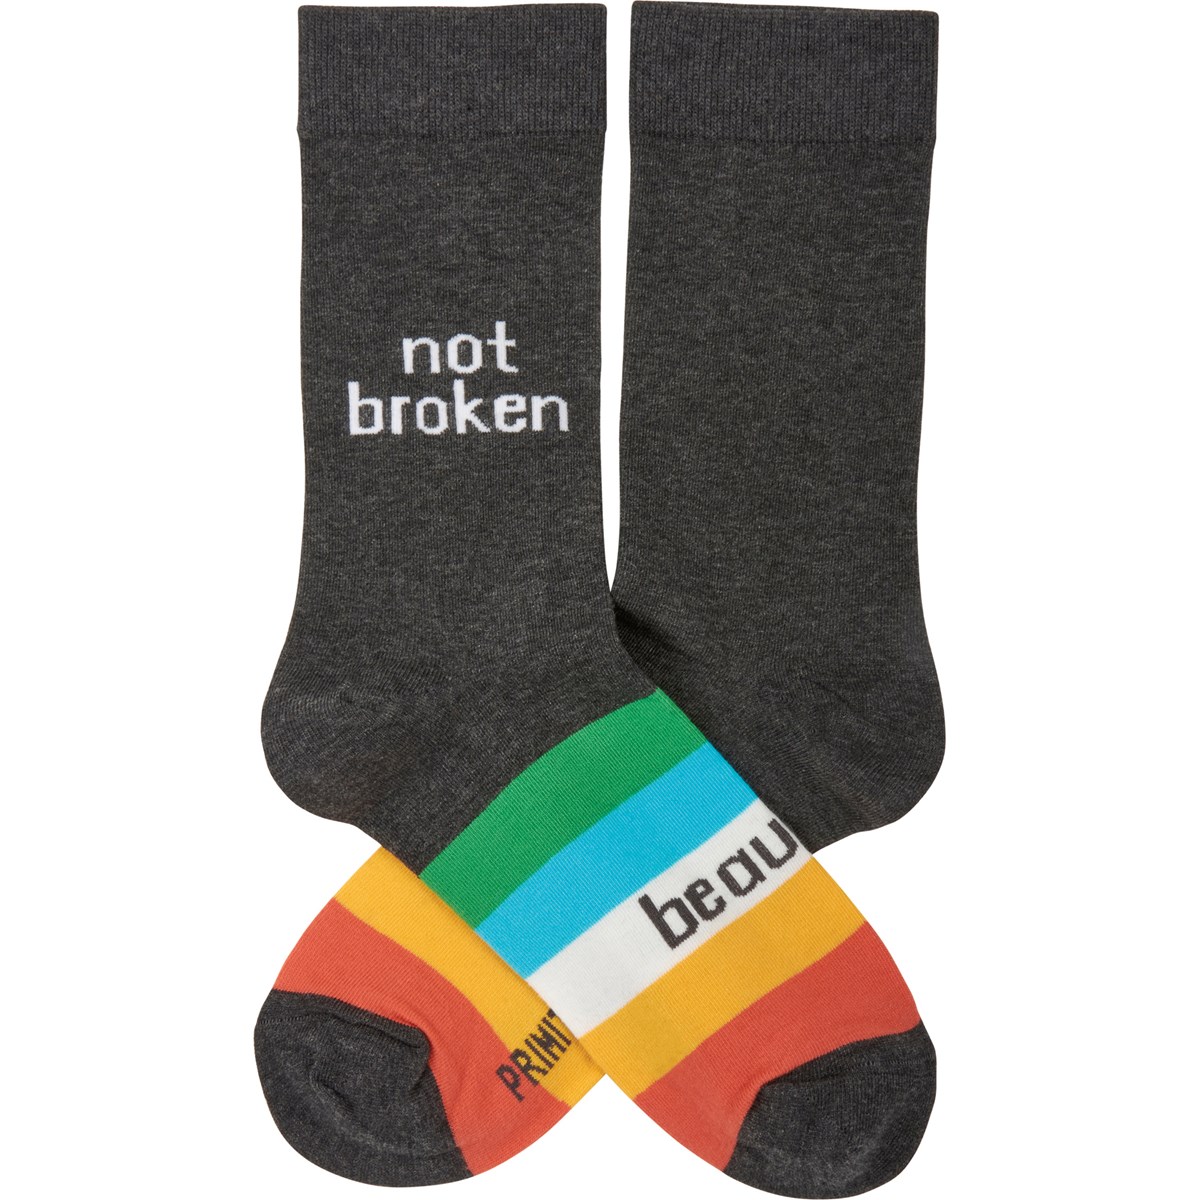 Not Broken Beautiful Socks - Cotton, Nylon, Spandex